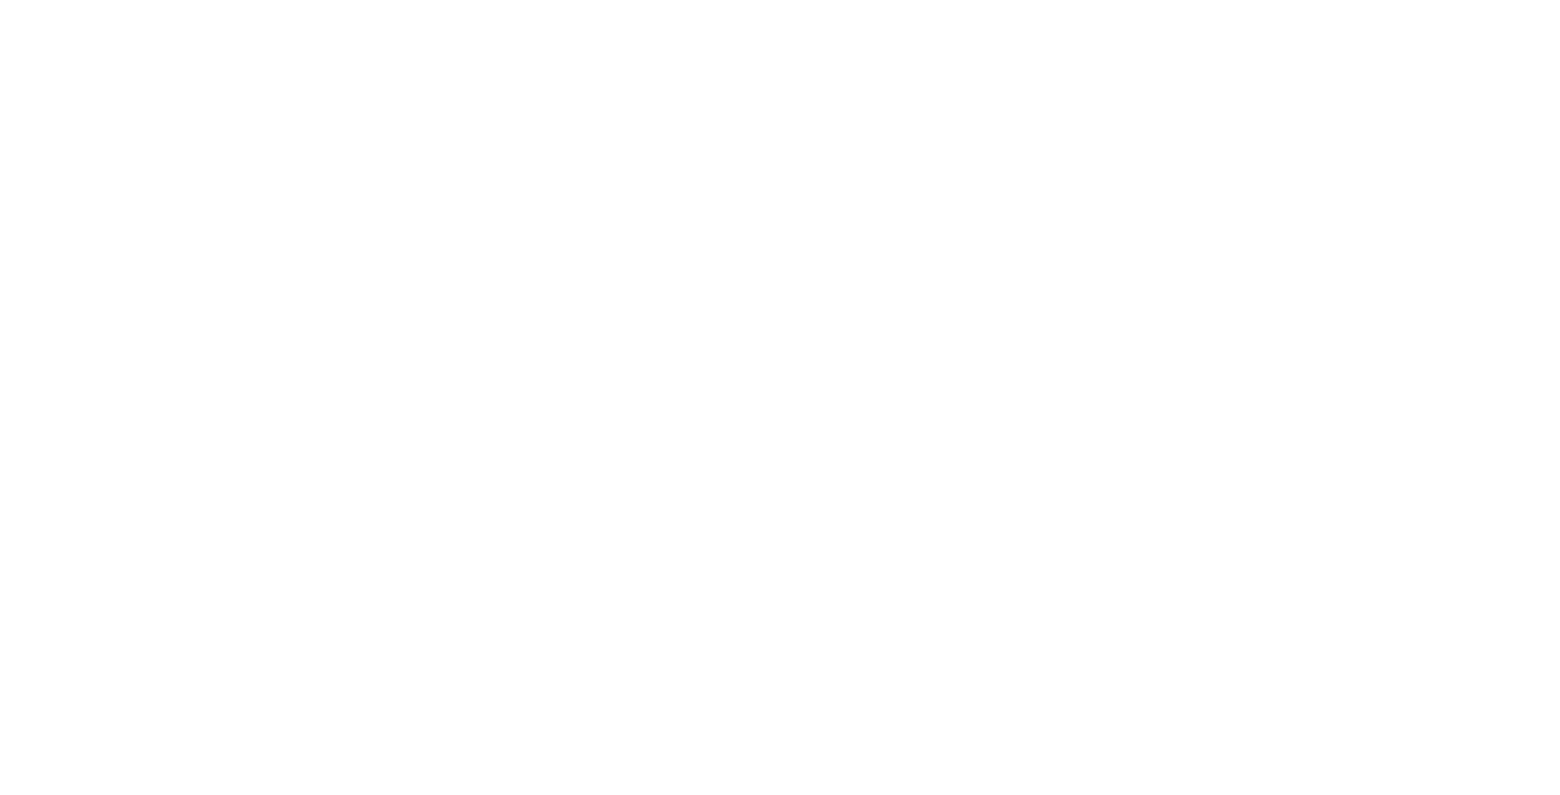 Qatar General Insurance & Reinsurance Company logo grand pour les fonds sombres (PNG transparent)